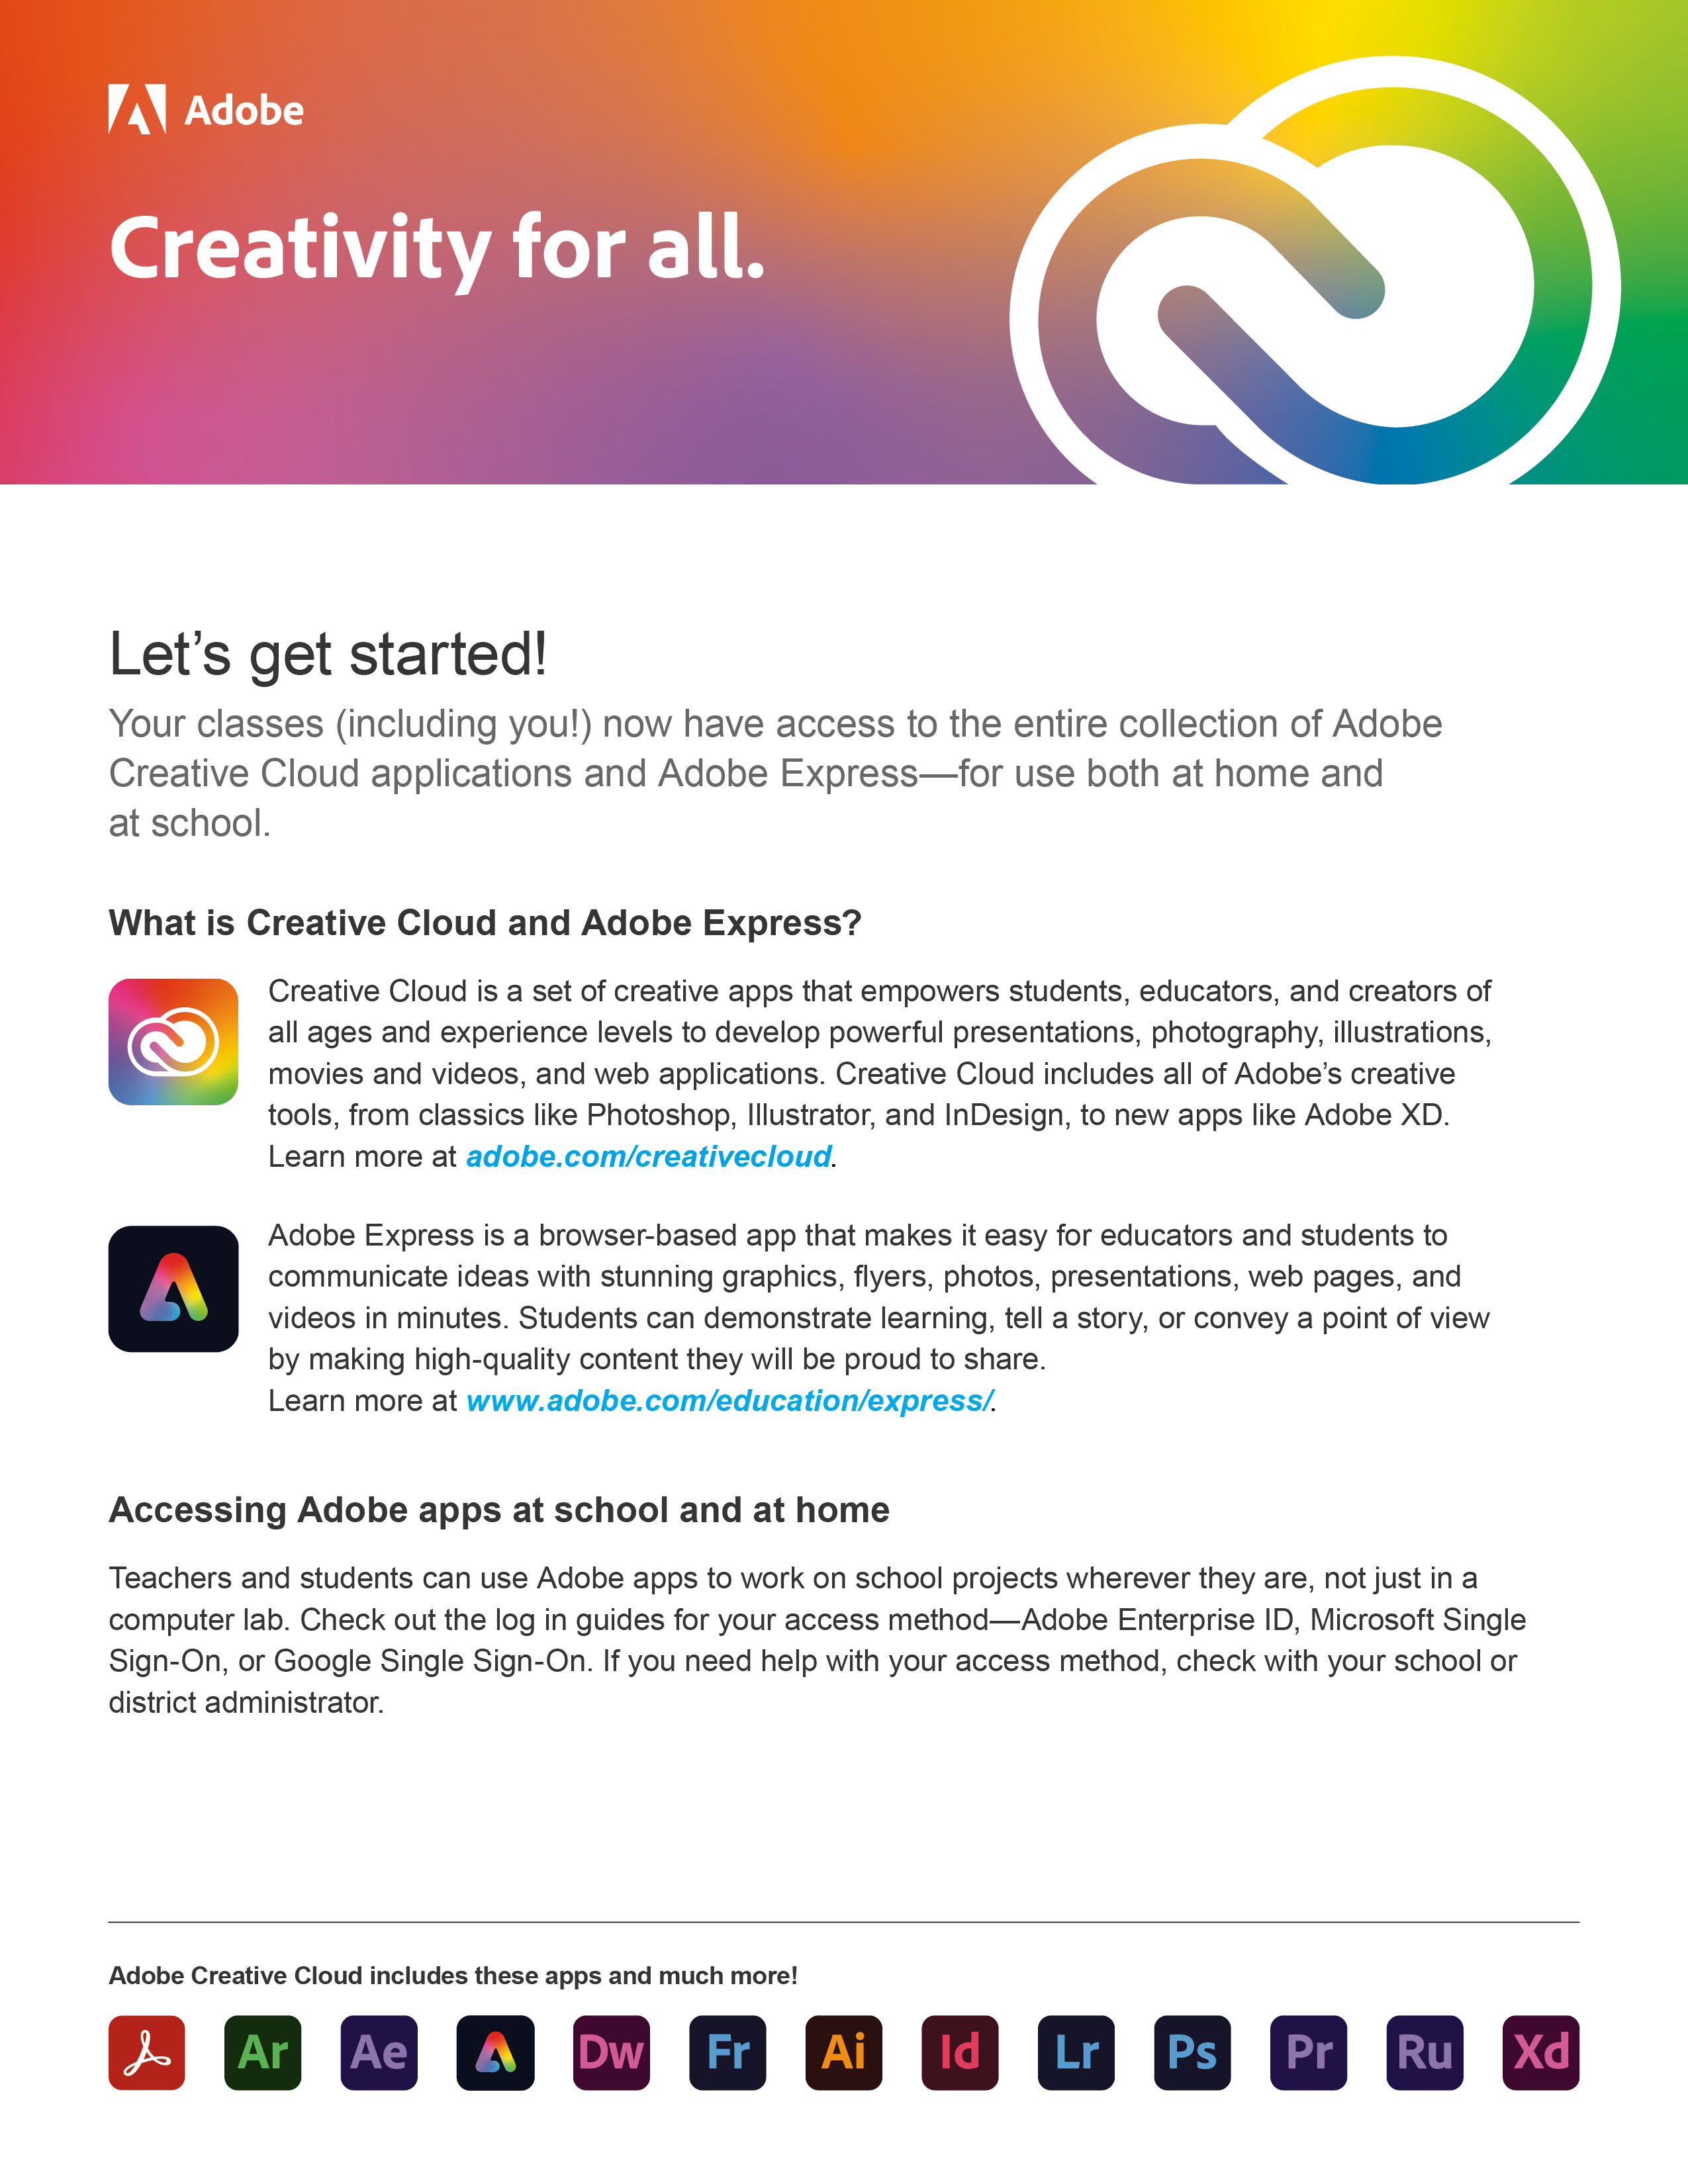 Adobe Express and Creative Cloud